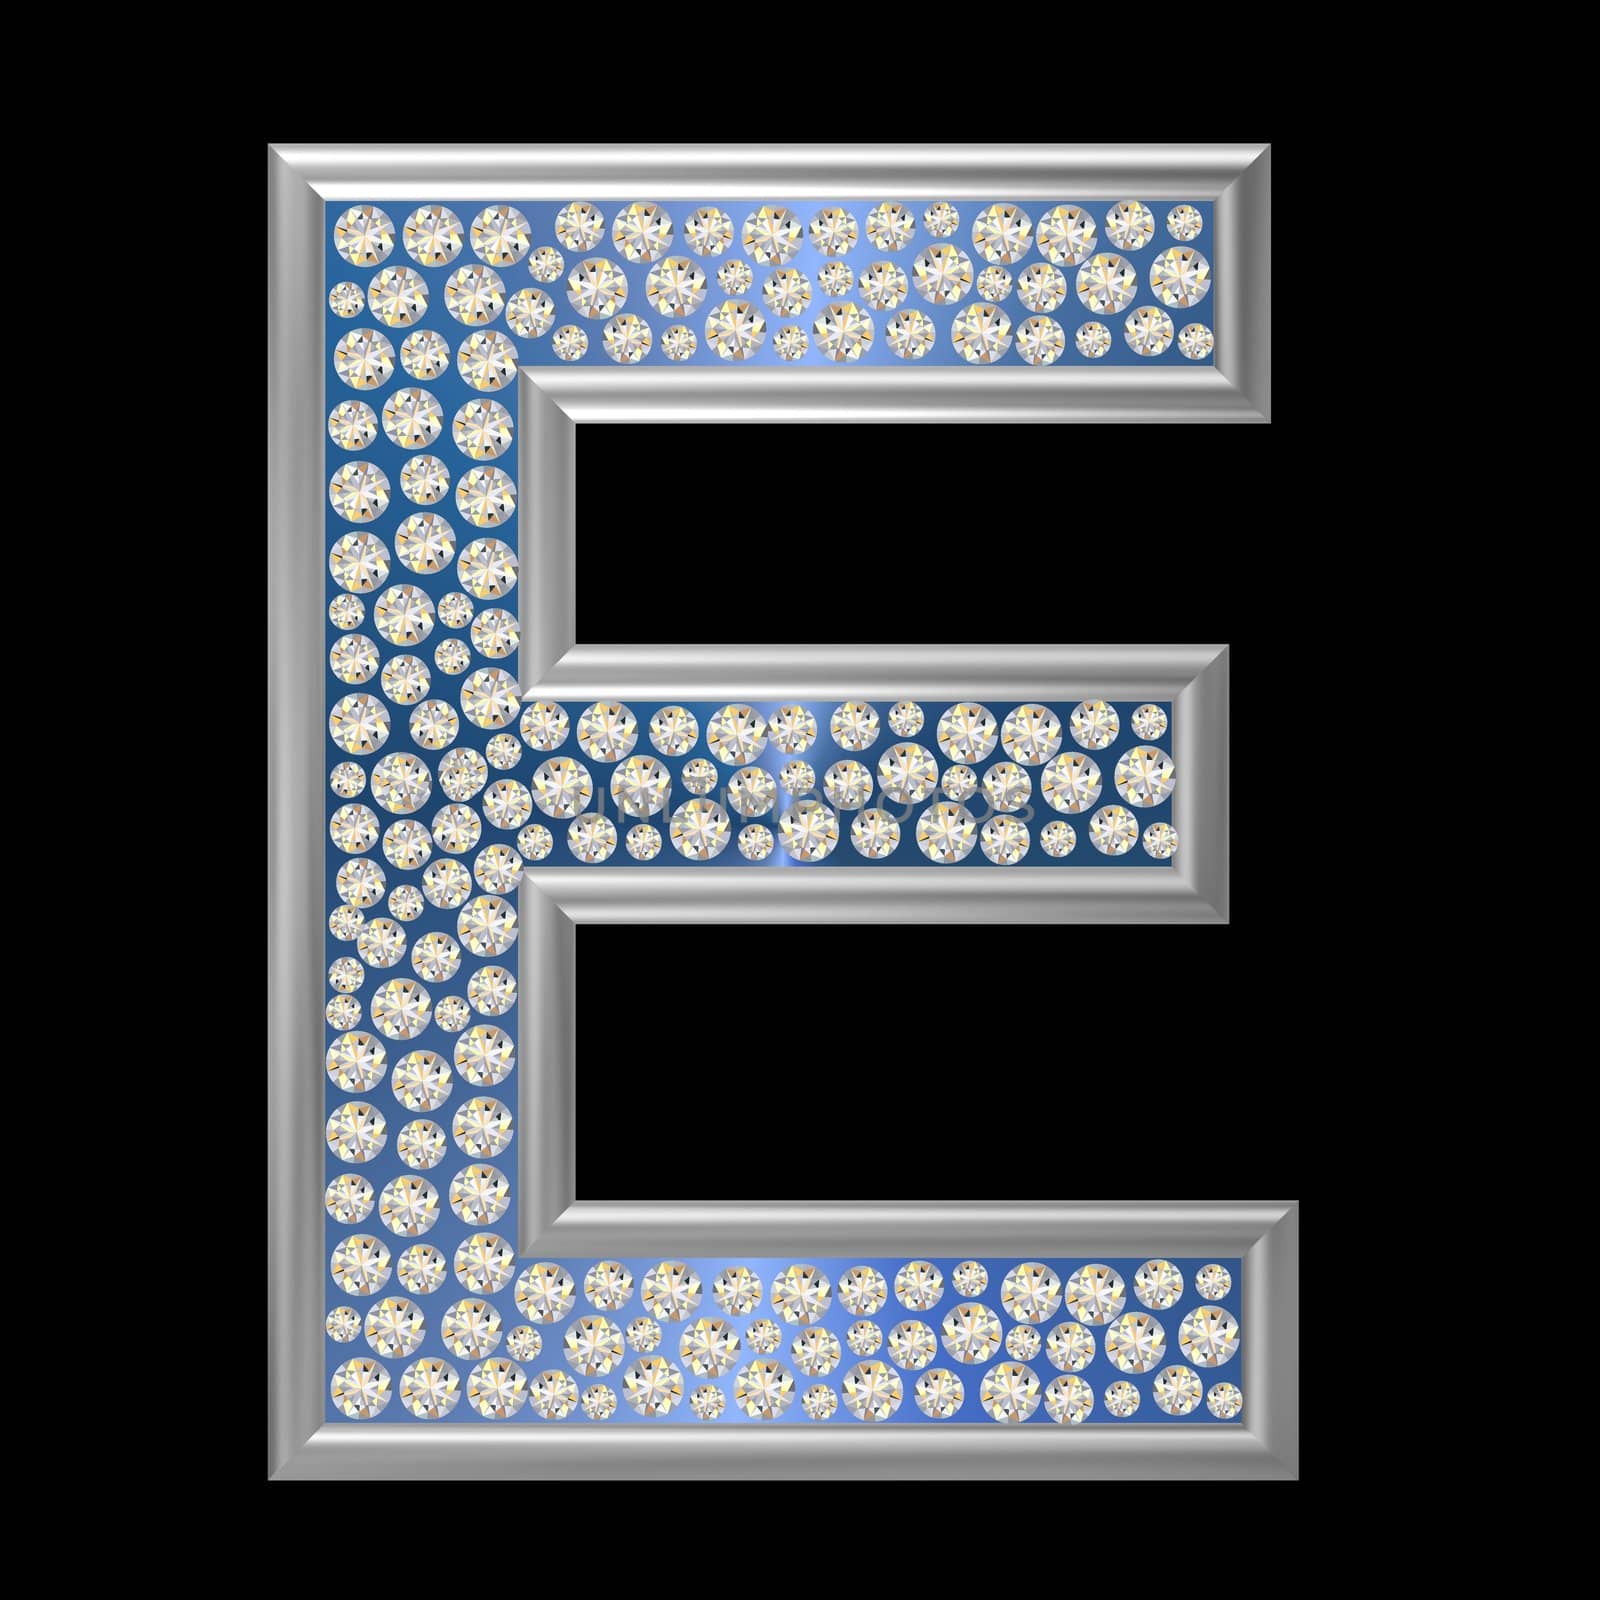 Diamond Character E by peromarketing